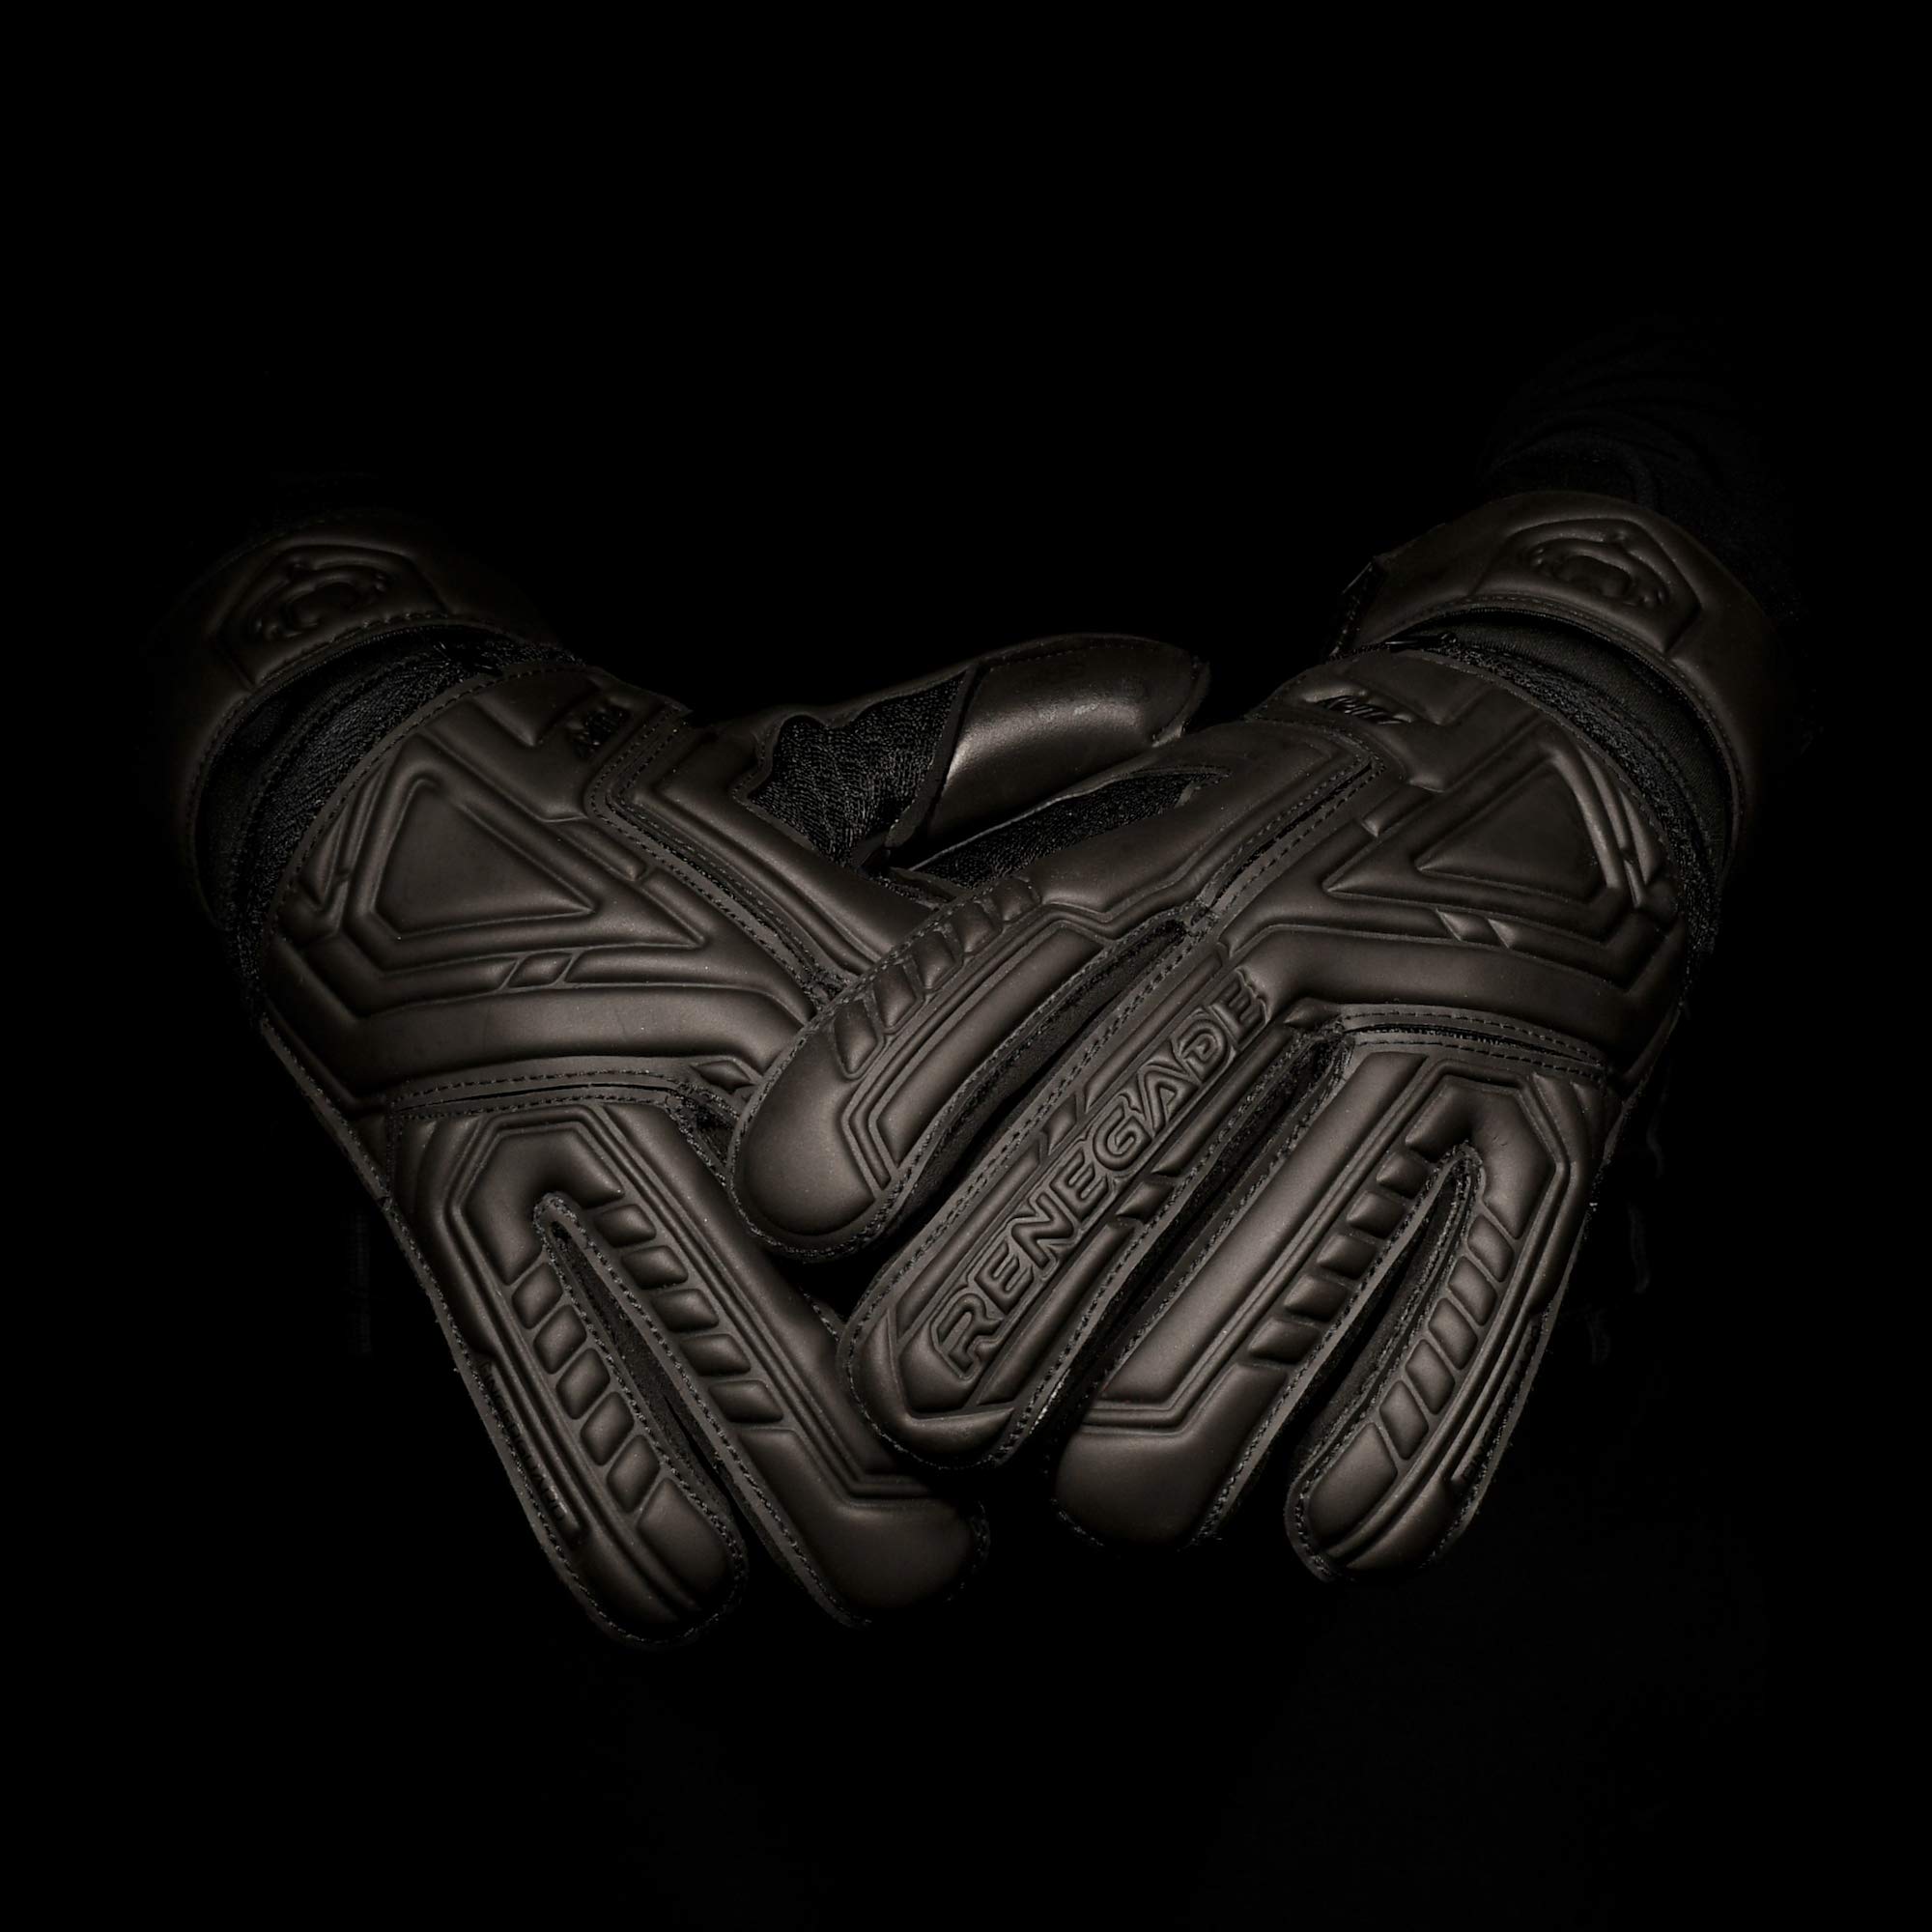 Renegade GK Fury Nightfall Goalie Gloves with Pro-Tek Fingersaves | 4mm Giga Grip & 4mm Duratek | Black Goalkeeping Gloves (Size 9, Youth-Adult, Roll Cut, Level 4)